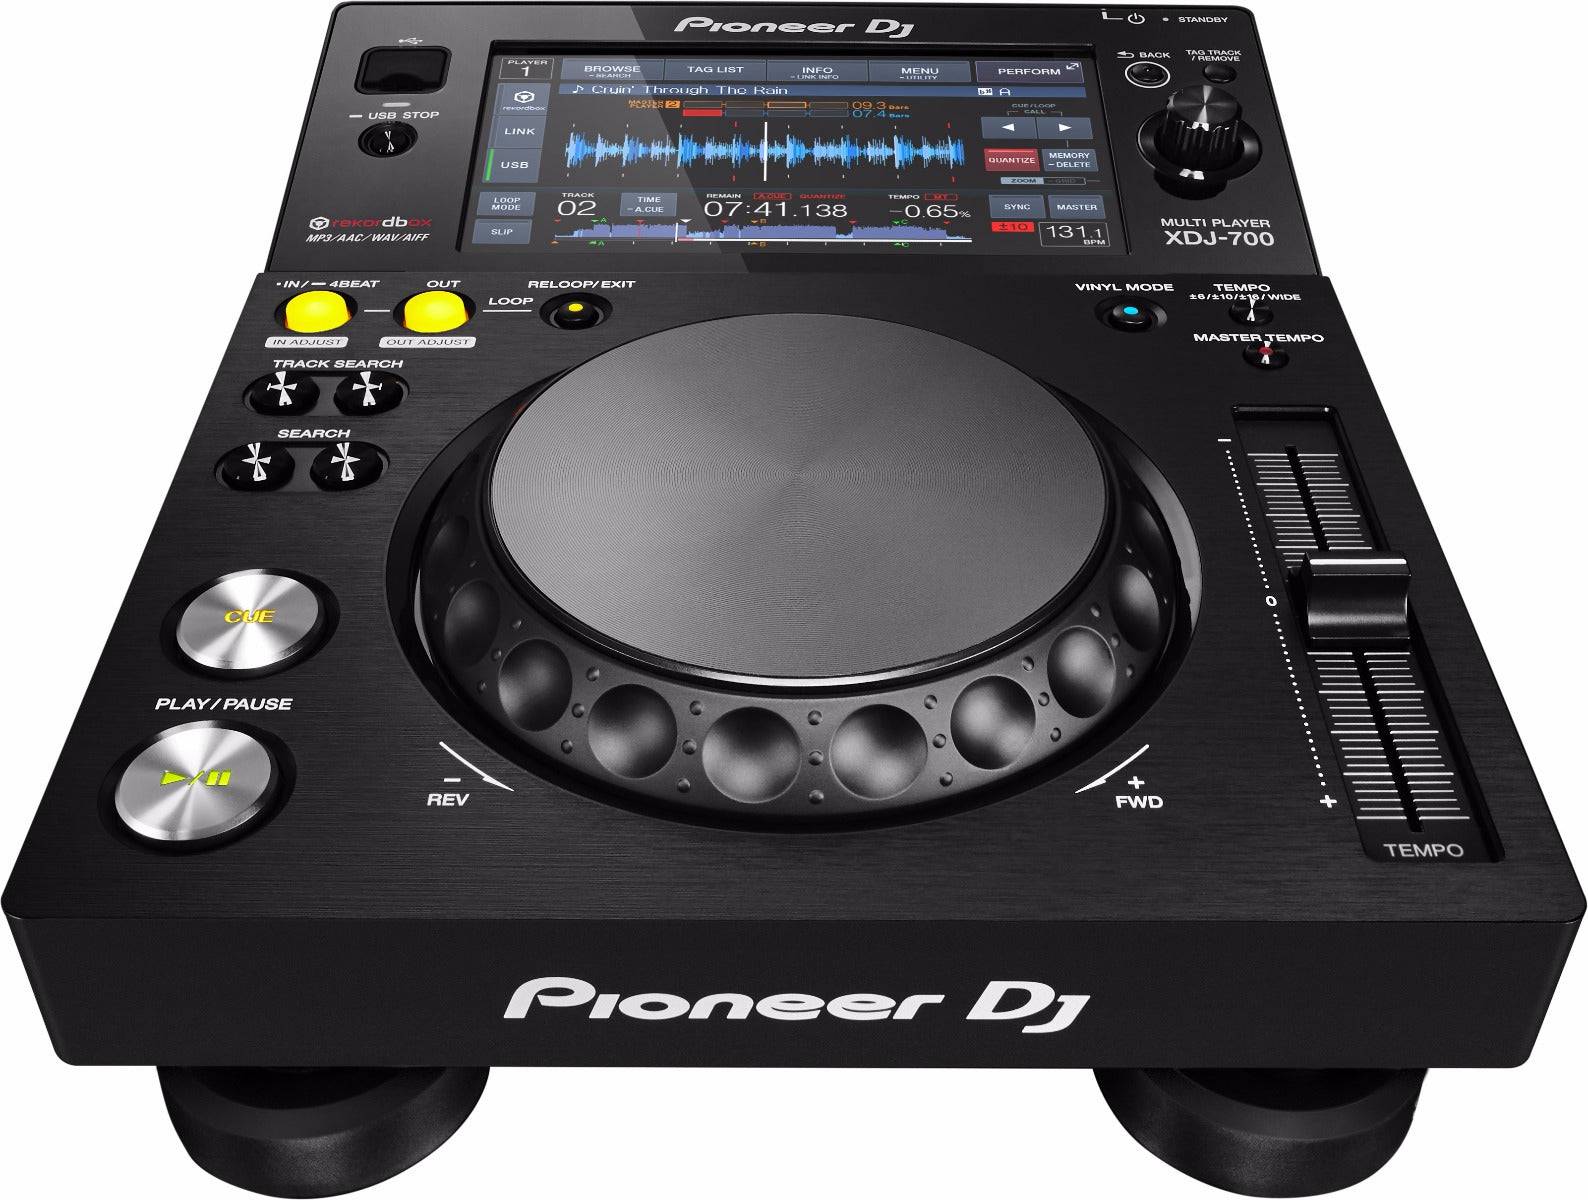 Pioneer Dj XDJ-700 Rekord Box-Ready, Compact Digital Deck - Hollywood DJ